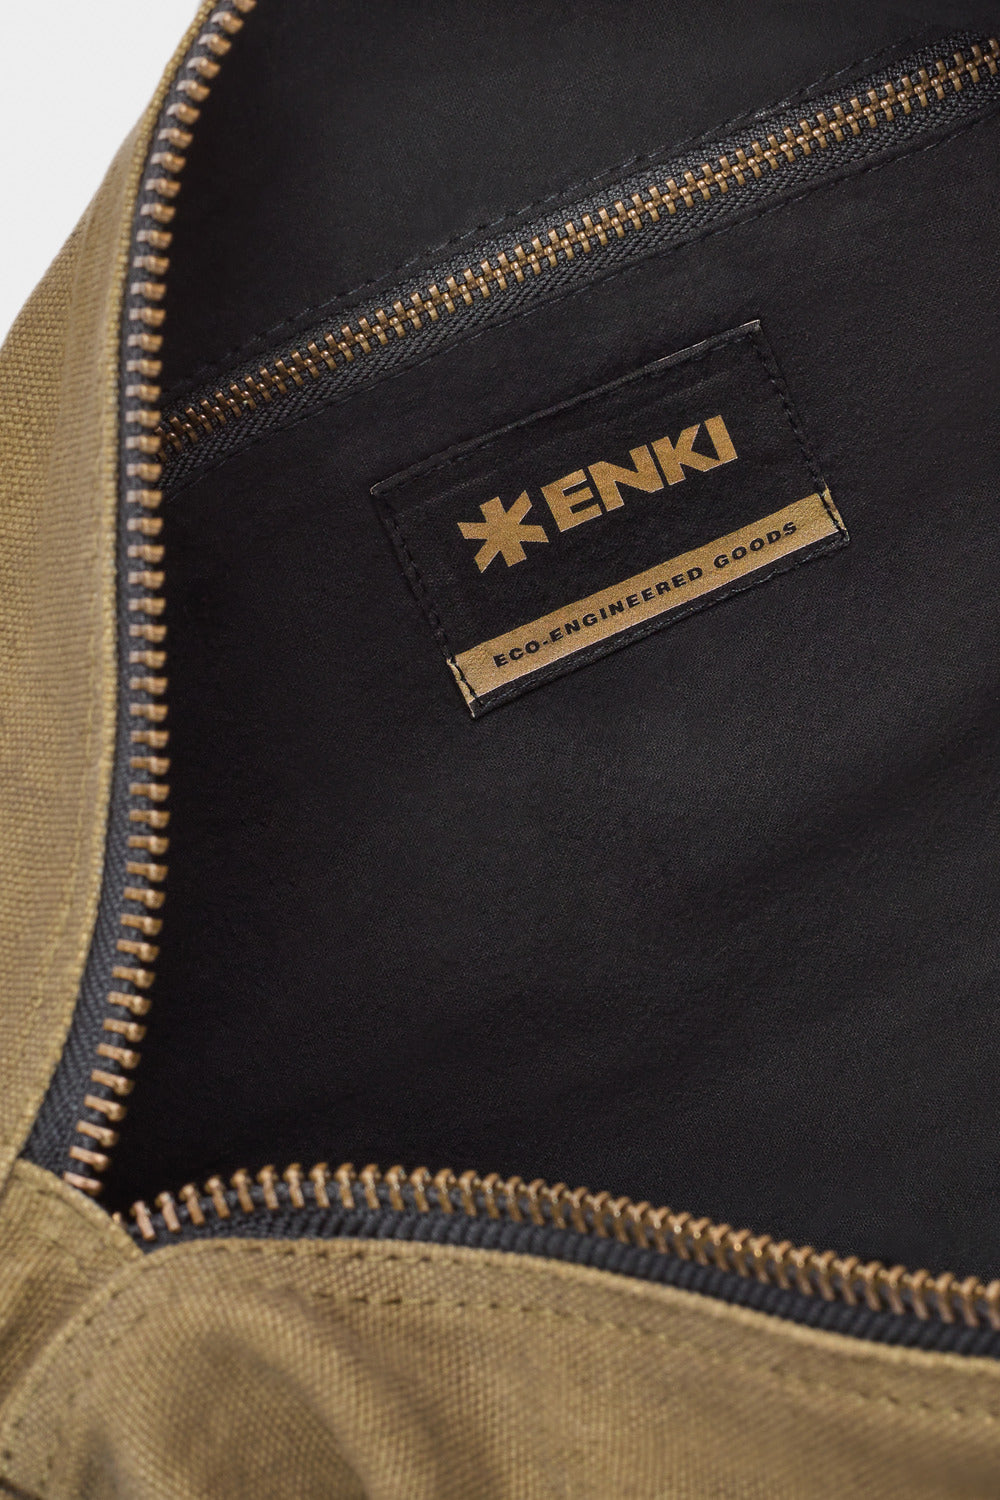 www.enkieyewear.com Enki Eco Ningizzida Men’s and Women’s Small Duffle Bag 